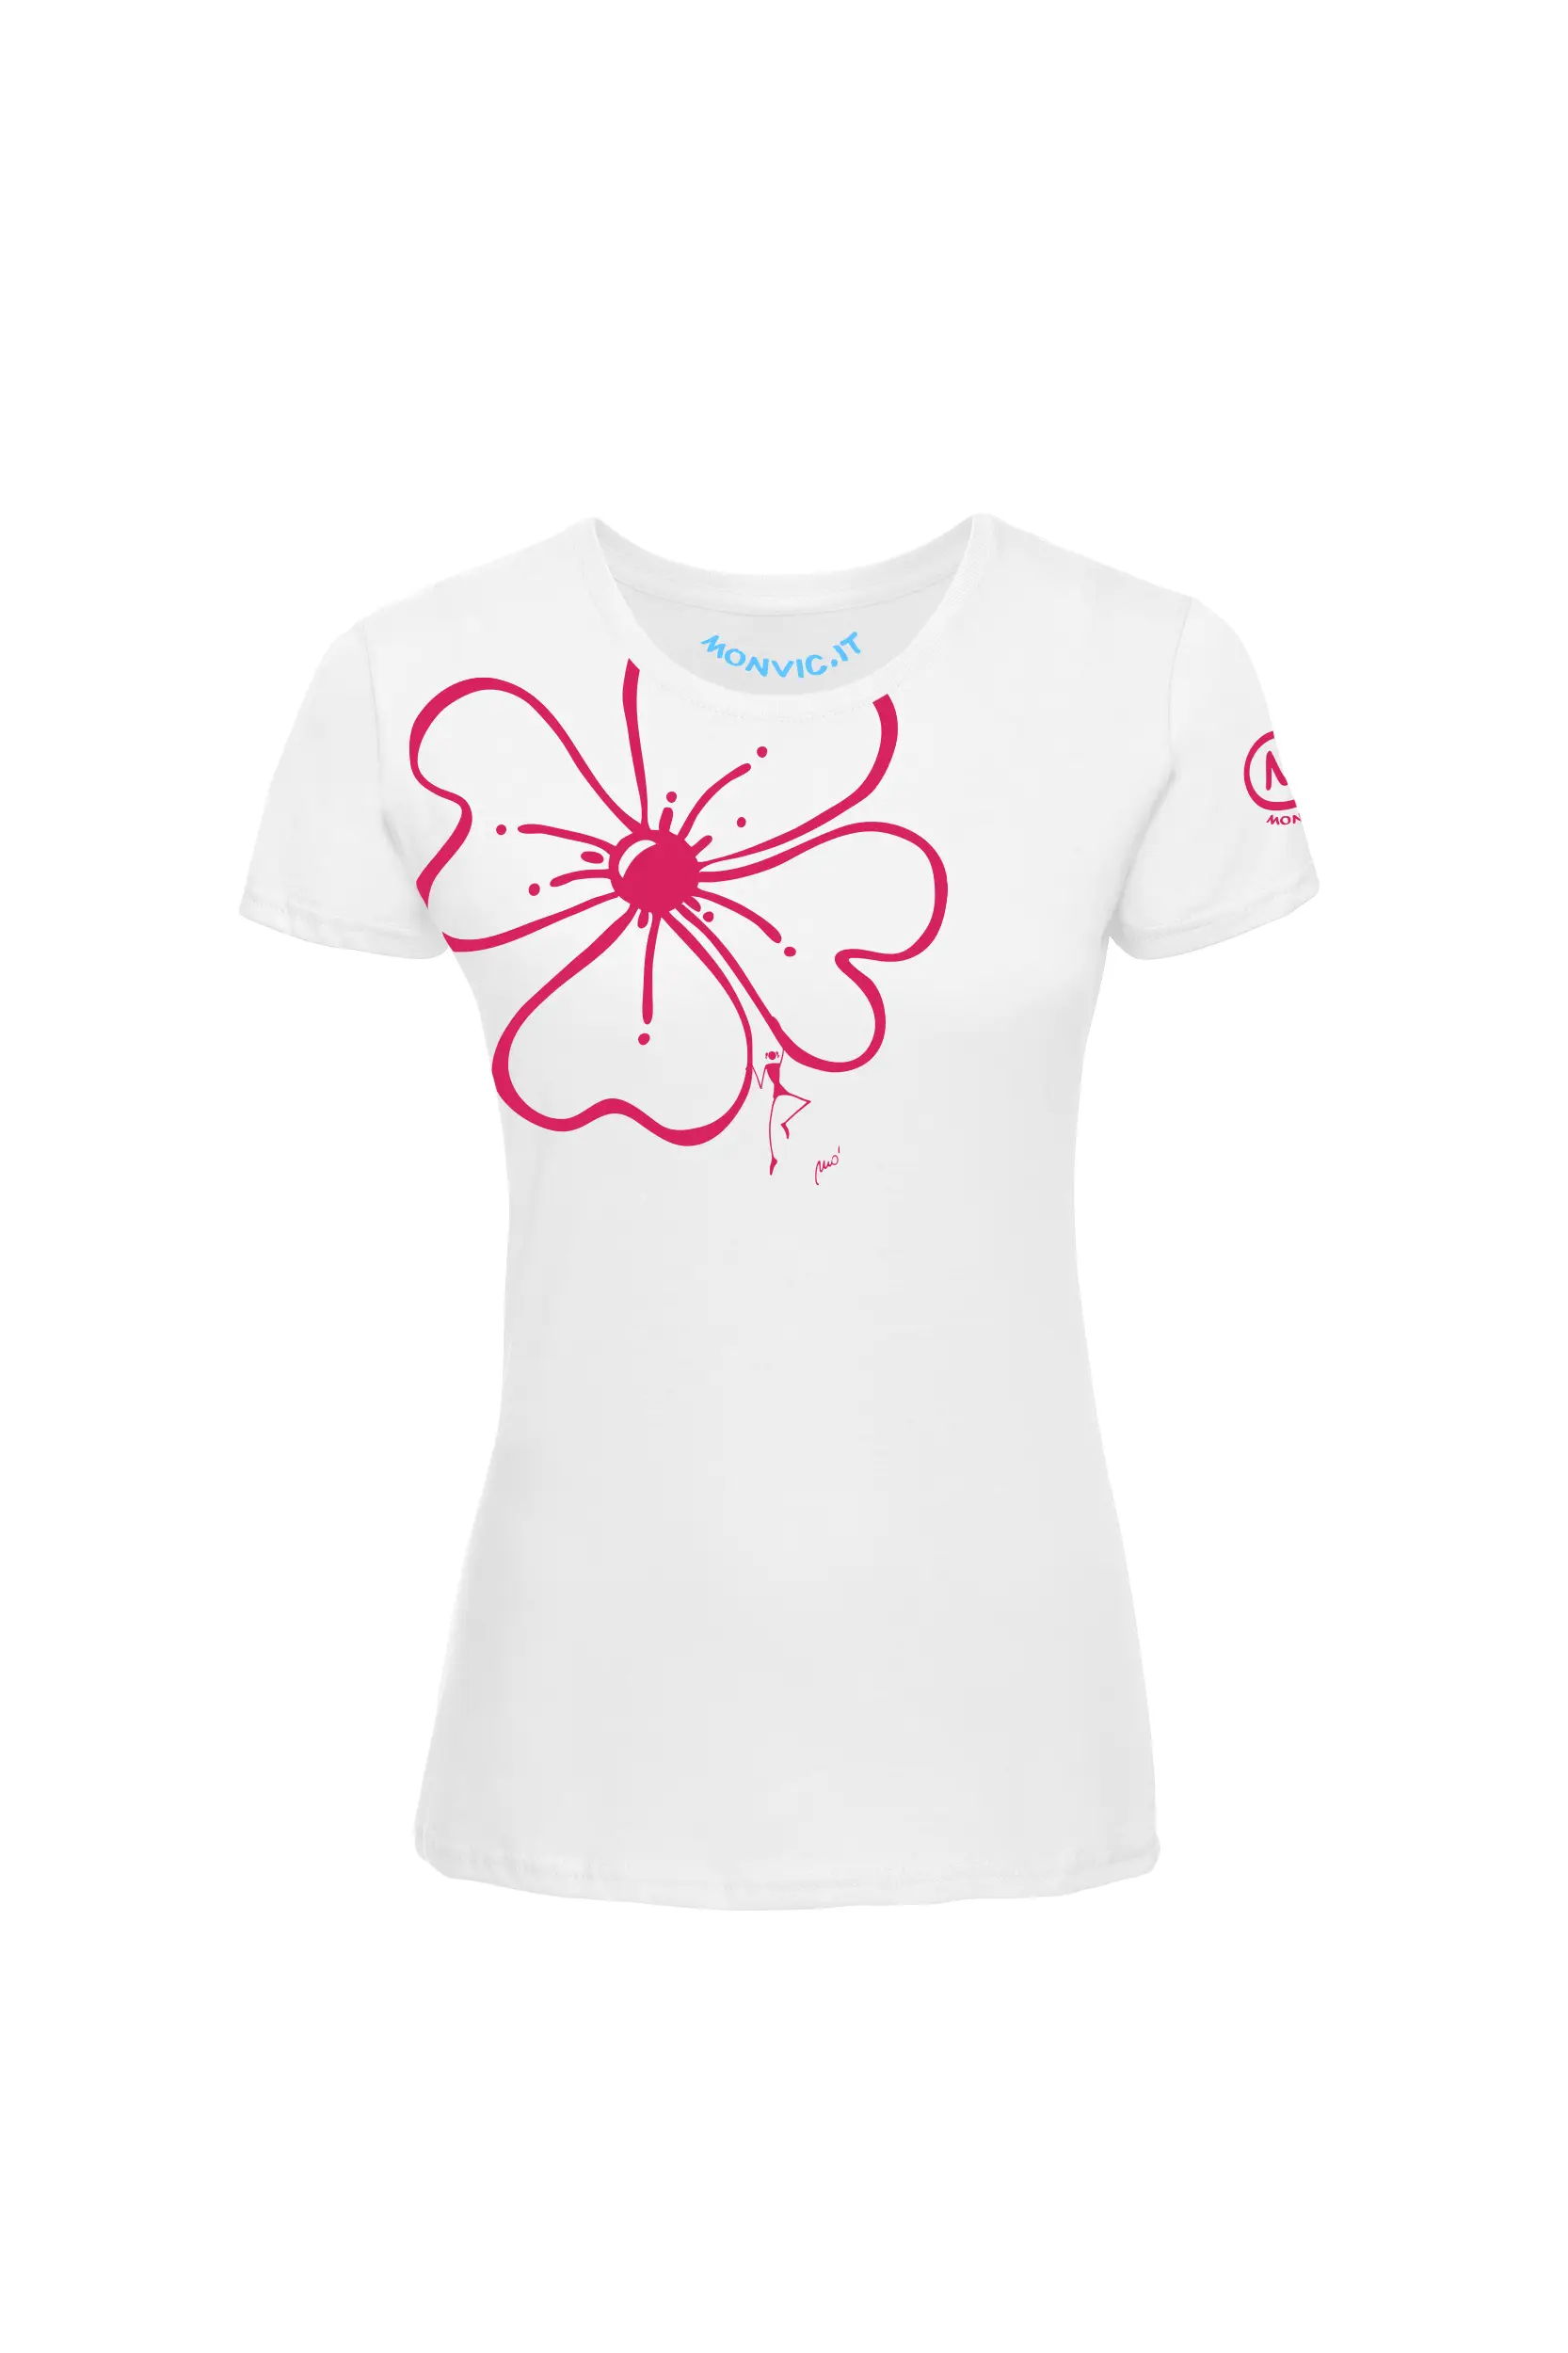 T-shirt arrampicata donna - cotone bianco - "Superflower" SHARON MONVIC